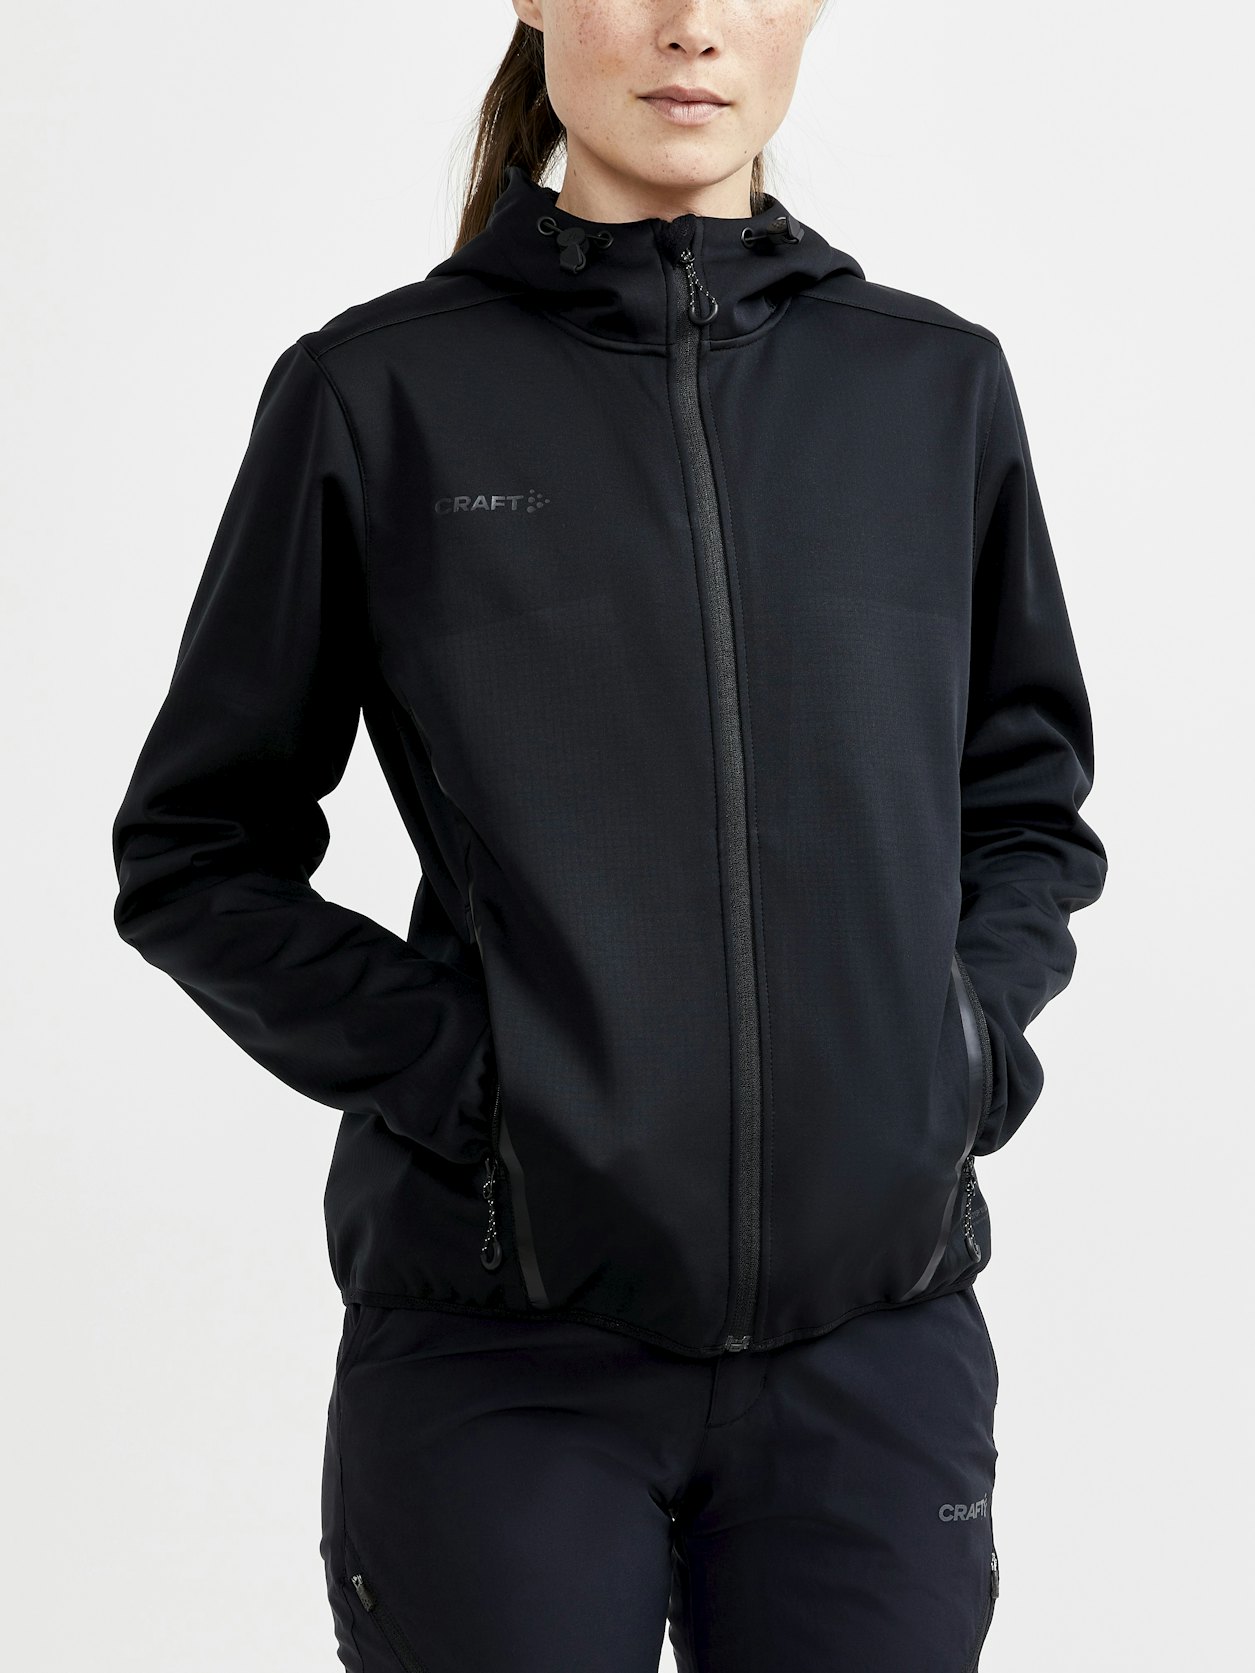 ADV Shell Jacket - Black | Craft Sportswear